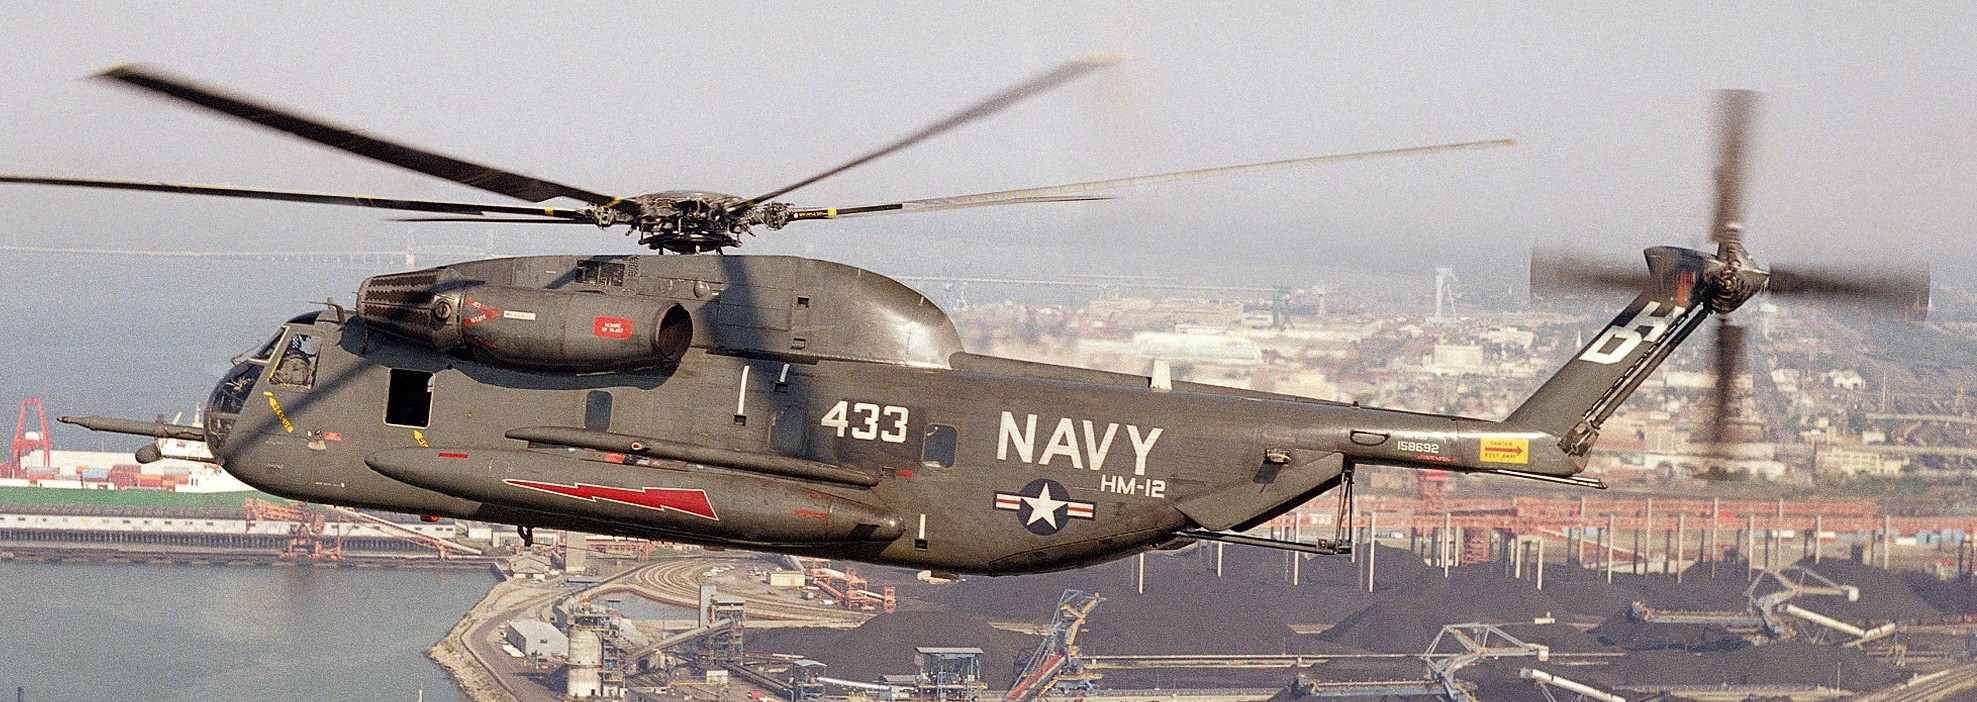 hm-12 sea dragons helicopter mine countermeasures squadron navy rh-53d sea stallion 11